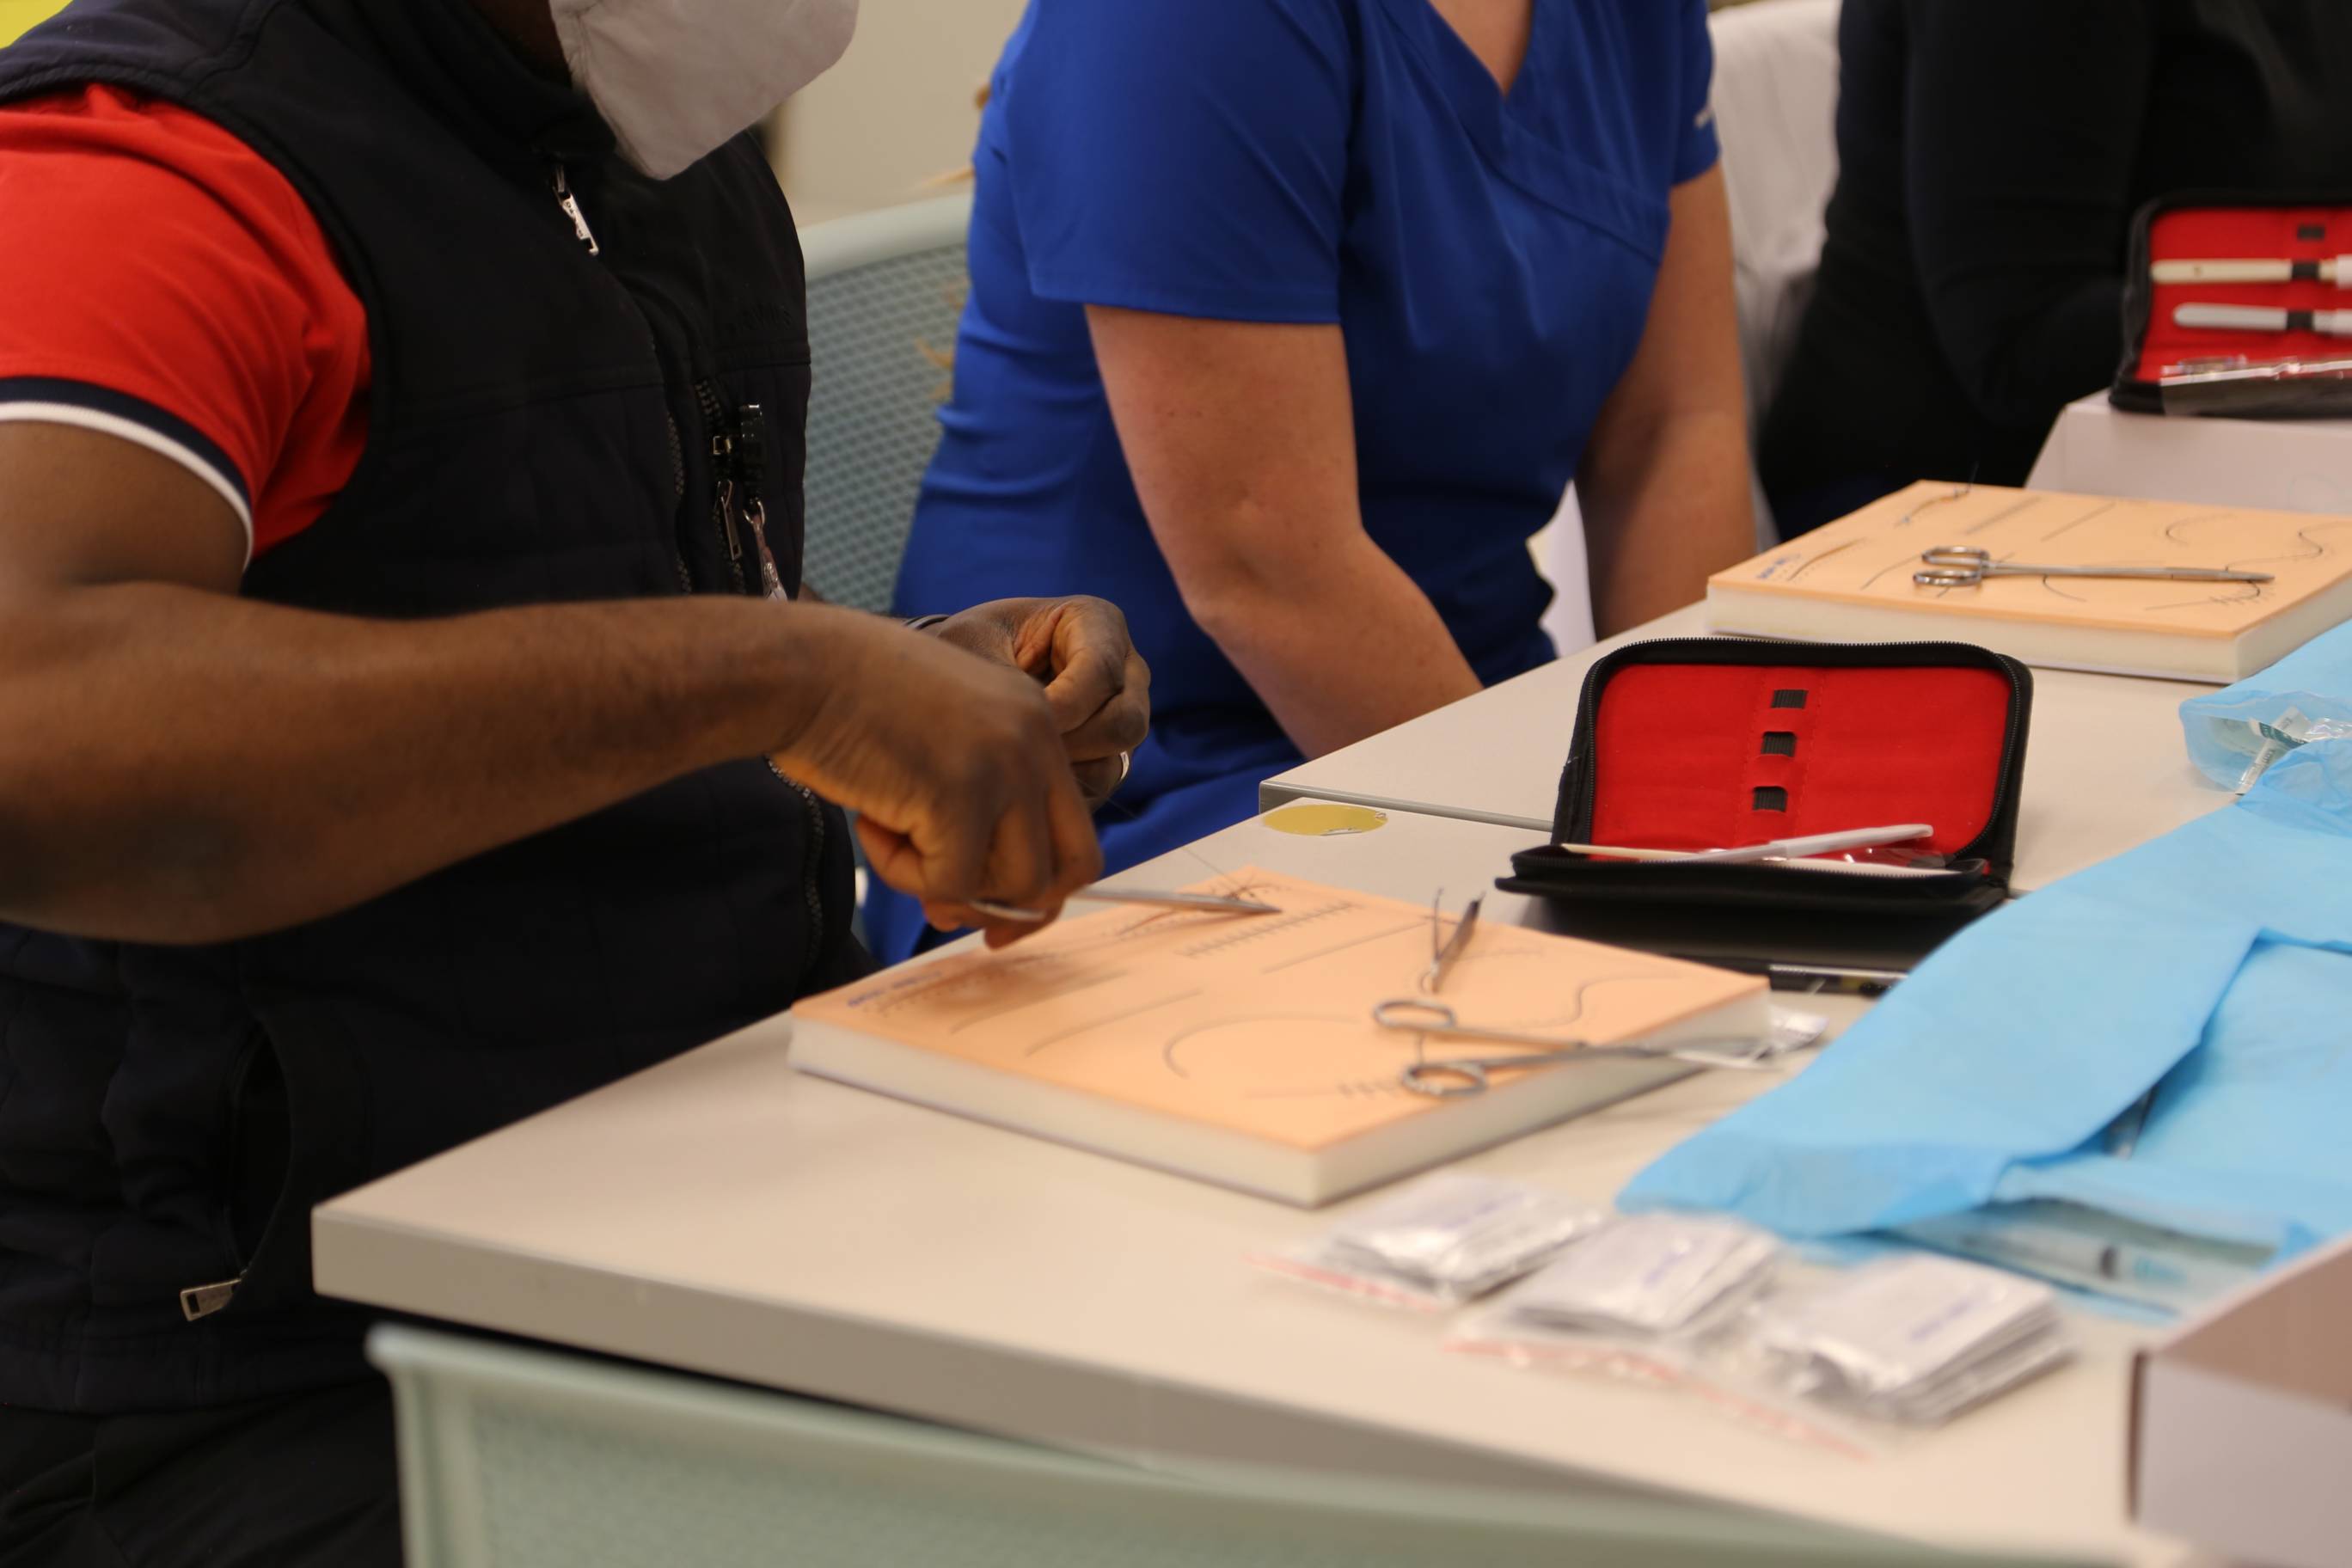 Nursing graduate students practicing suturing in the simulation lab